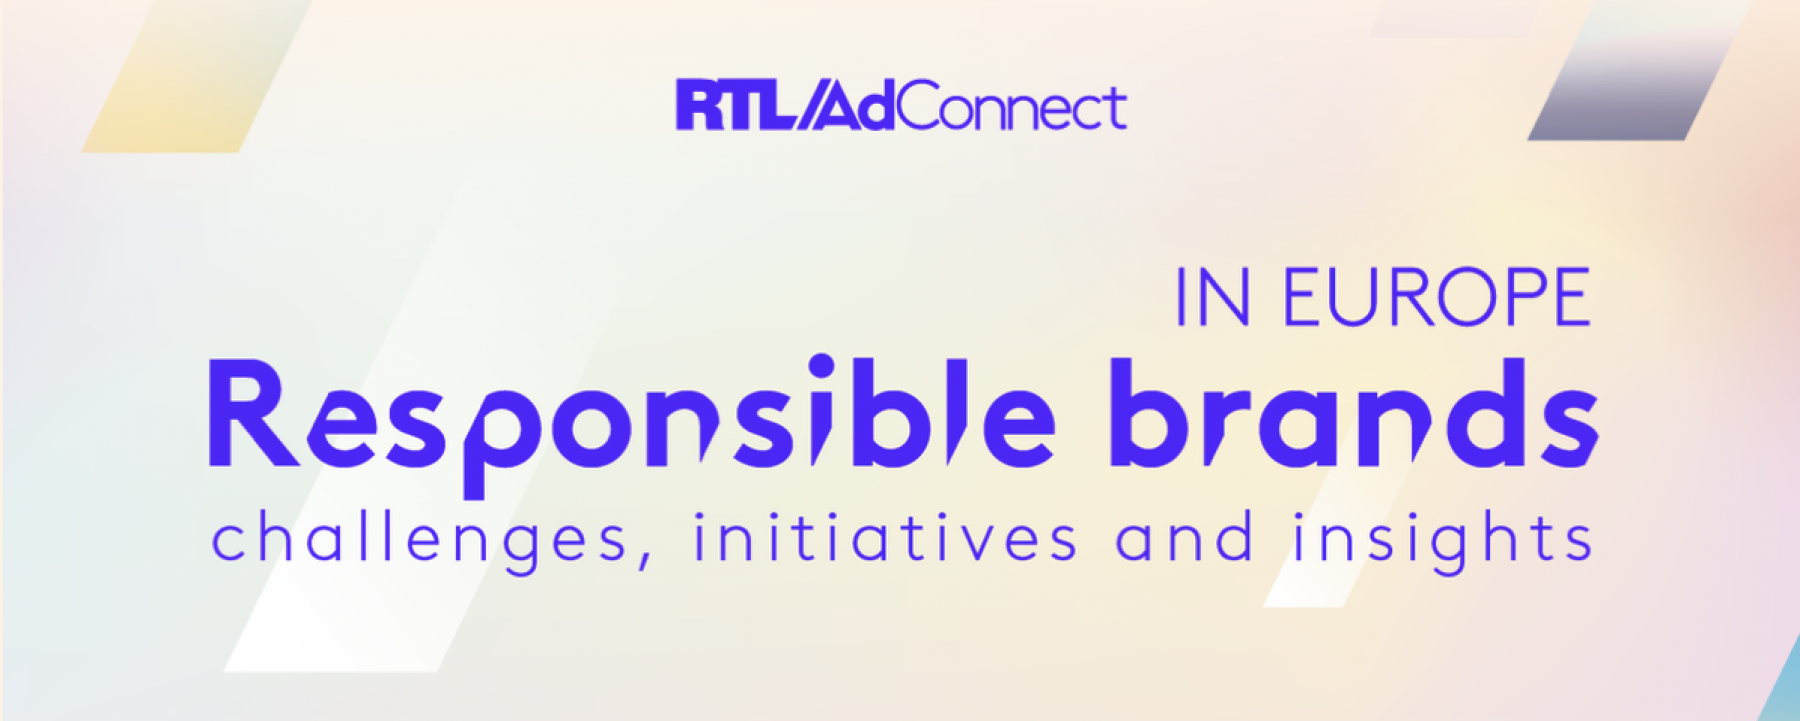 Responsible Brands in Europe, organisé par RTL AdConnect le 6 mai 2021